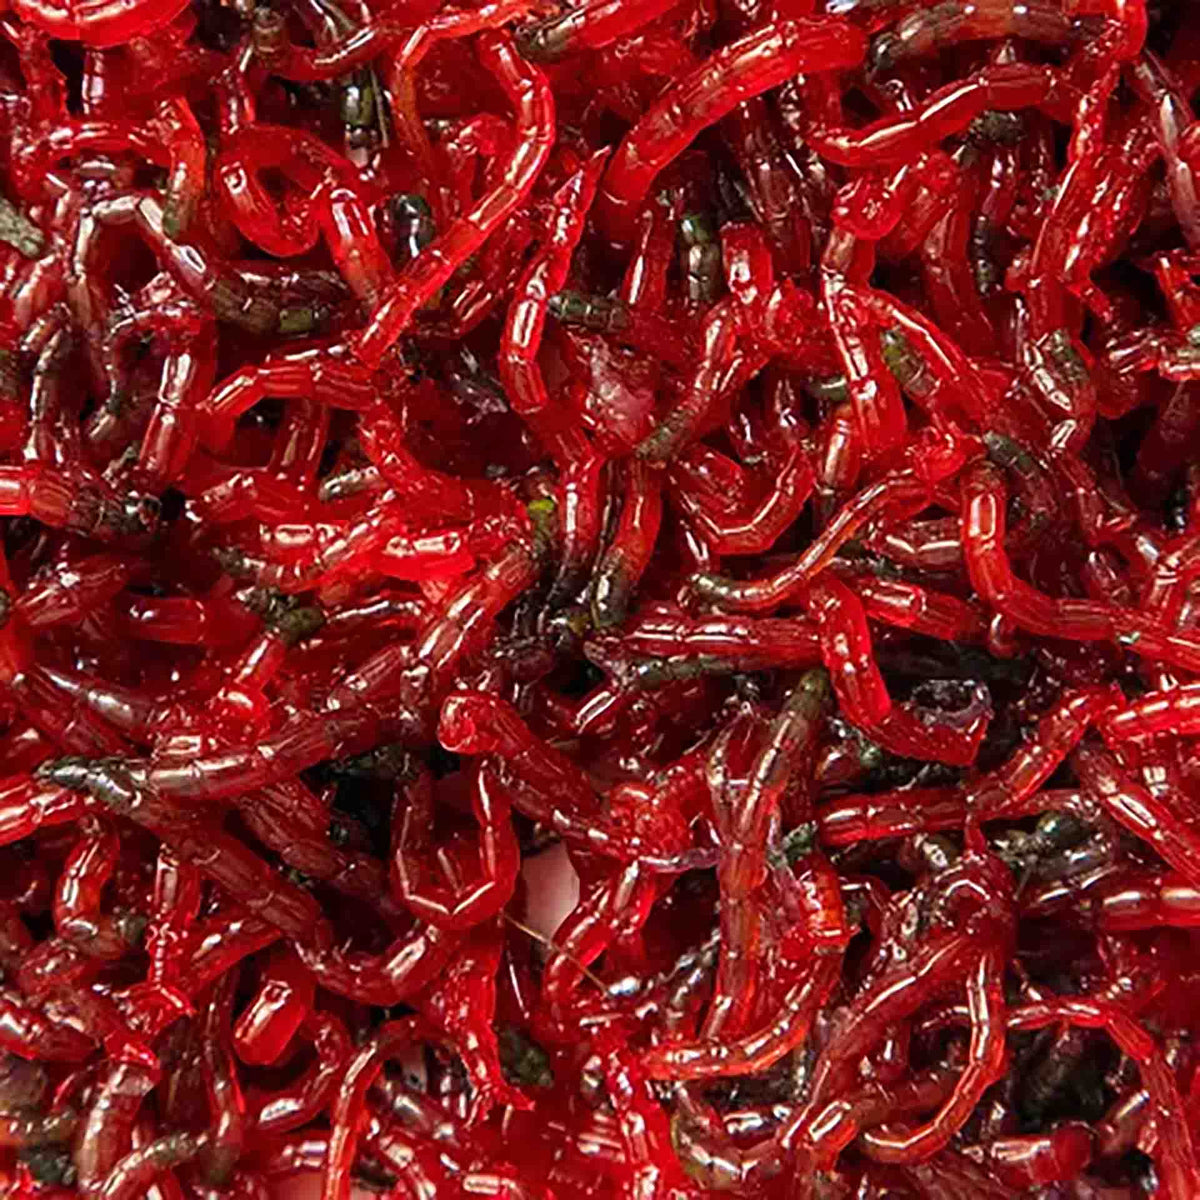 Aqua Natural Freeze Dried Bloodworms 26g